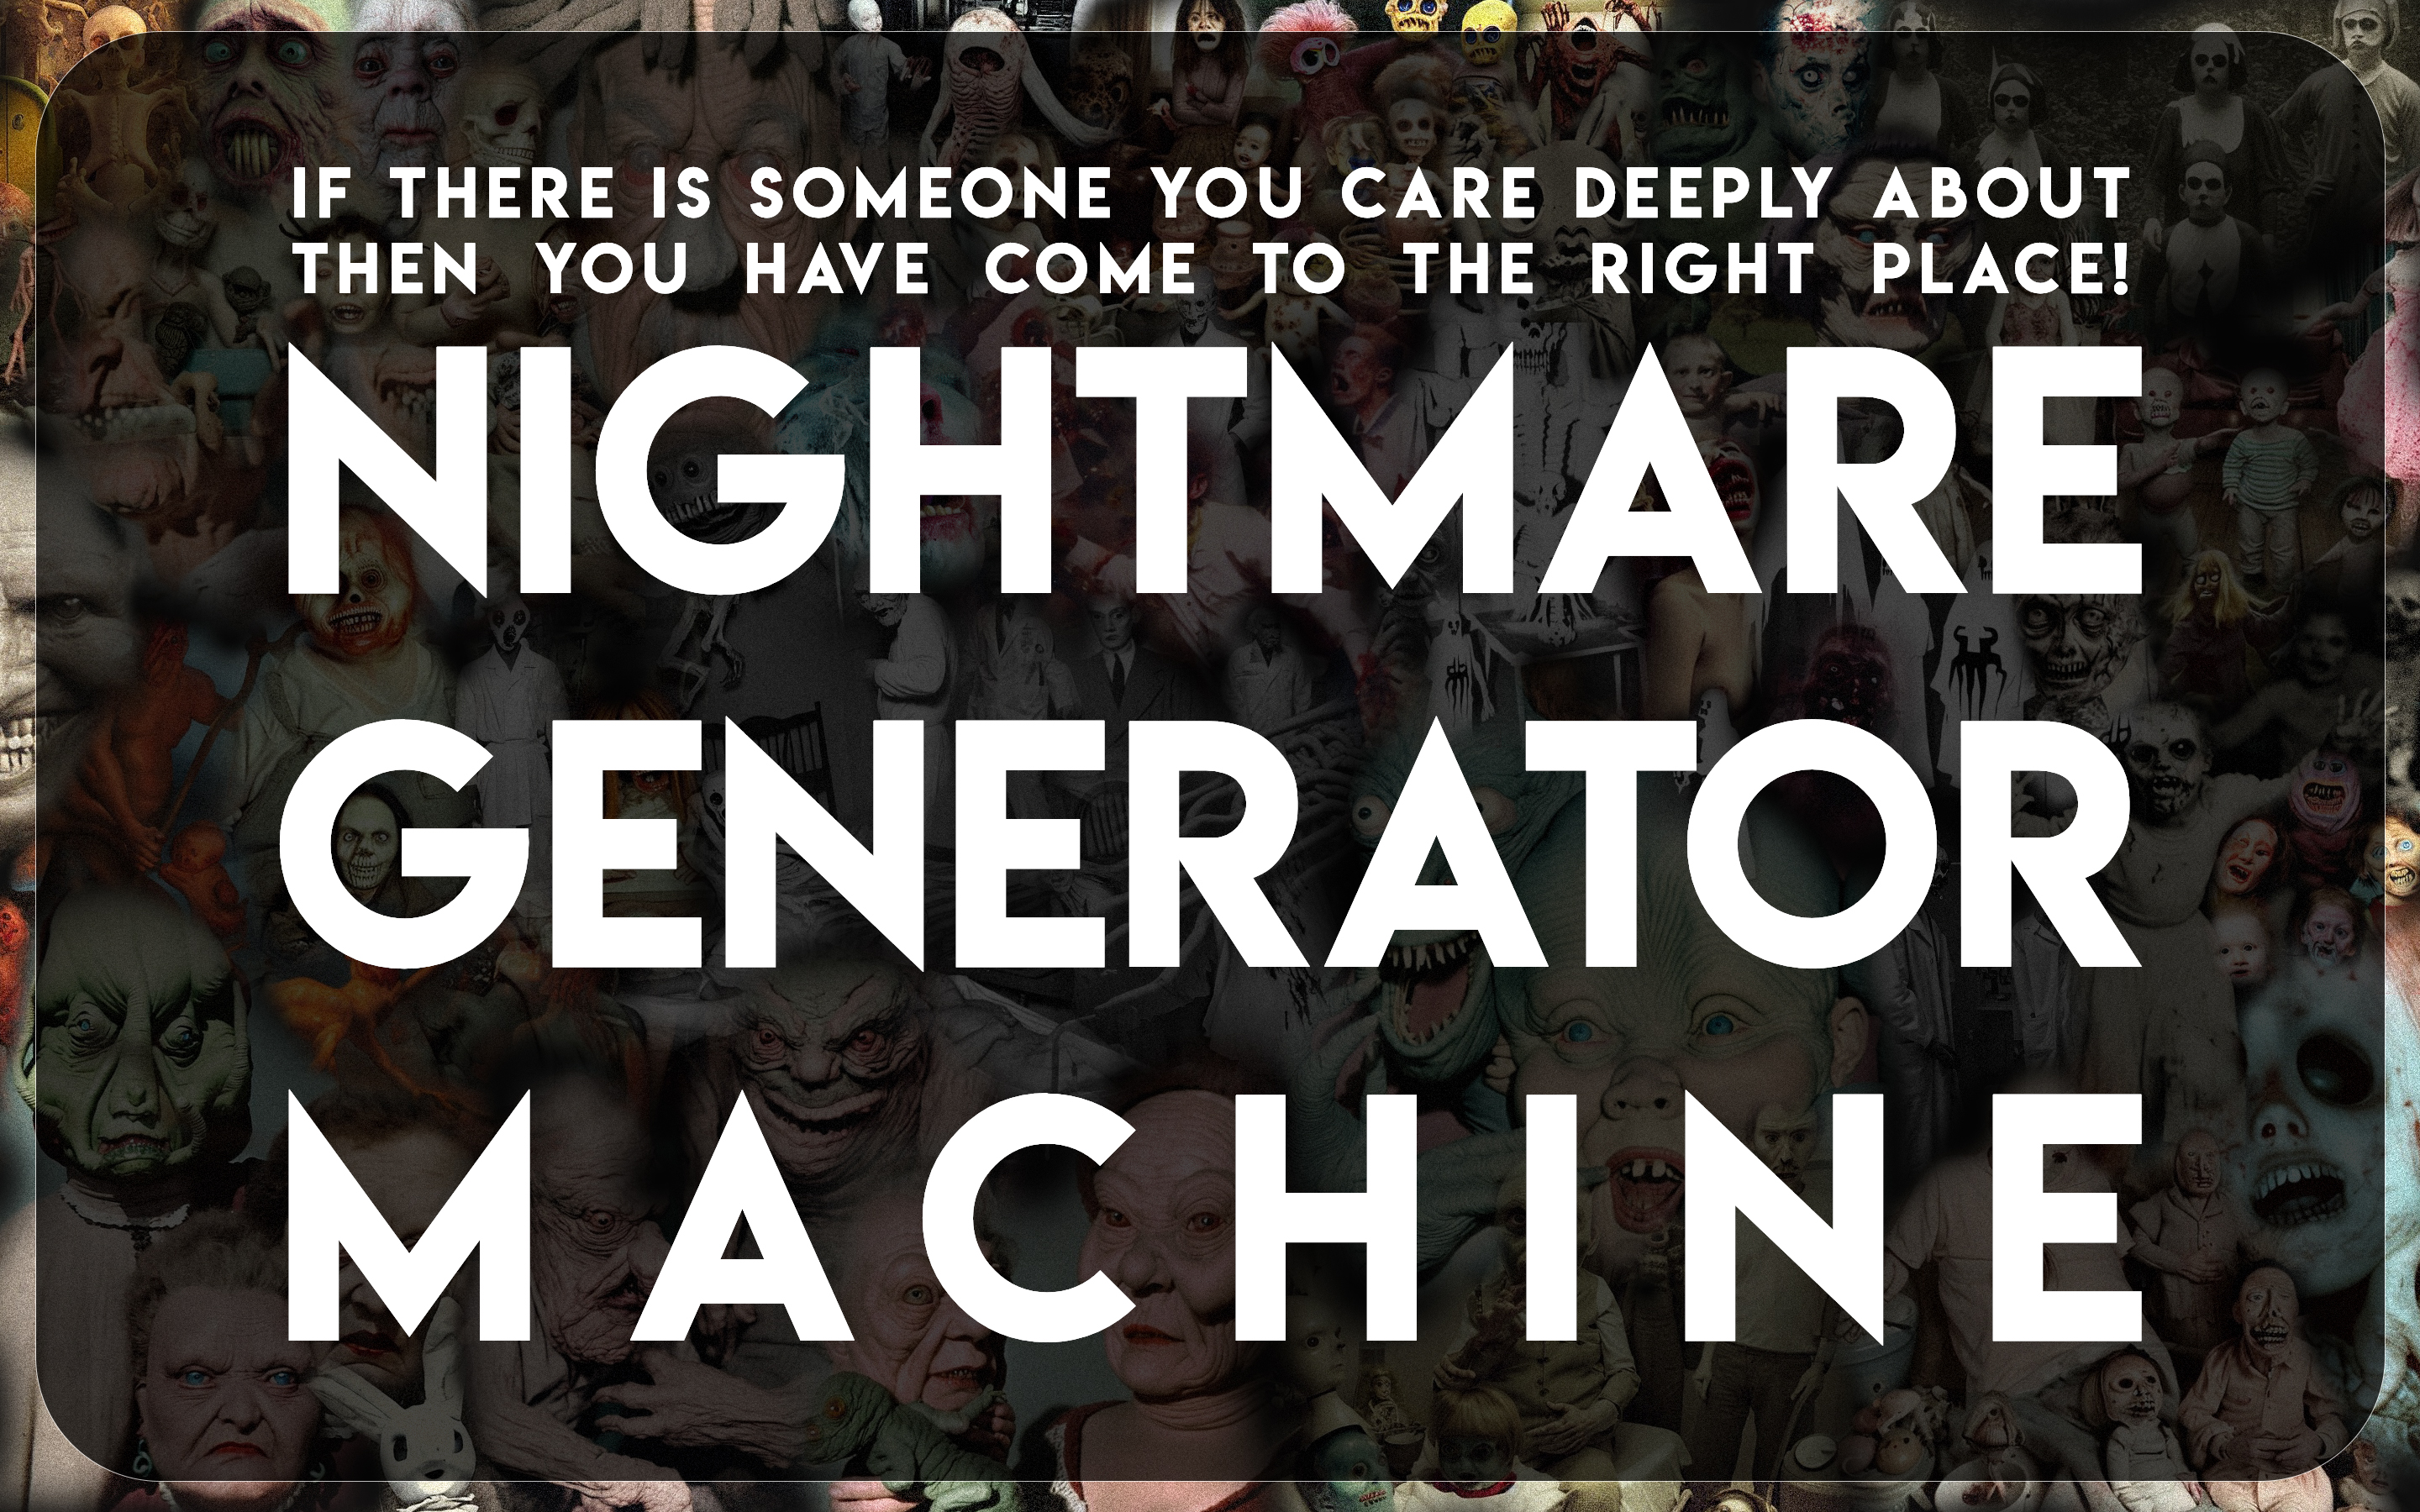 Nightmare Generator Machine - Application